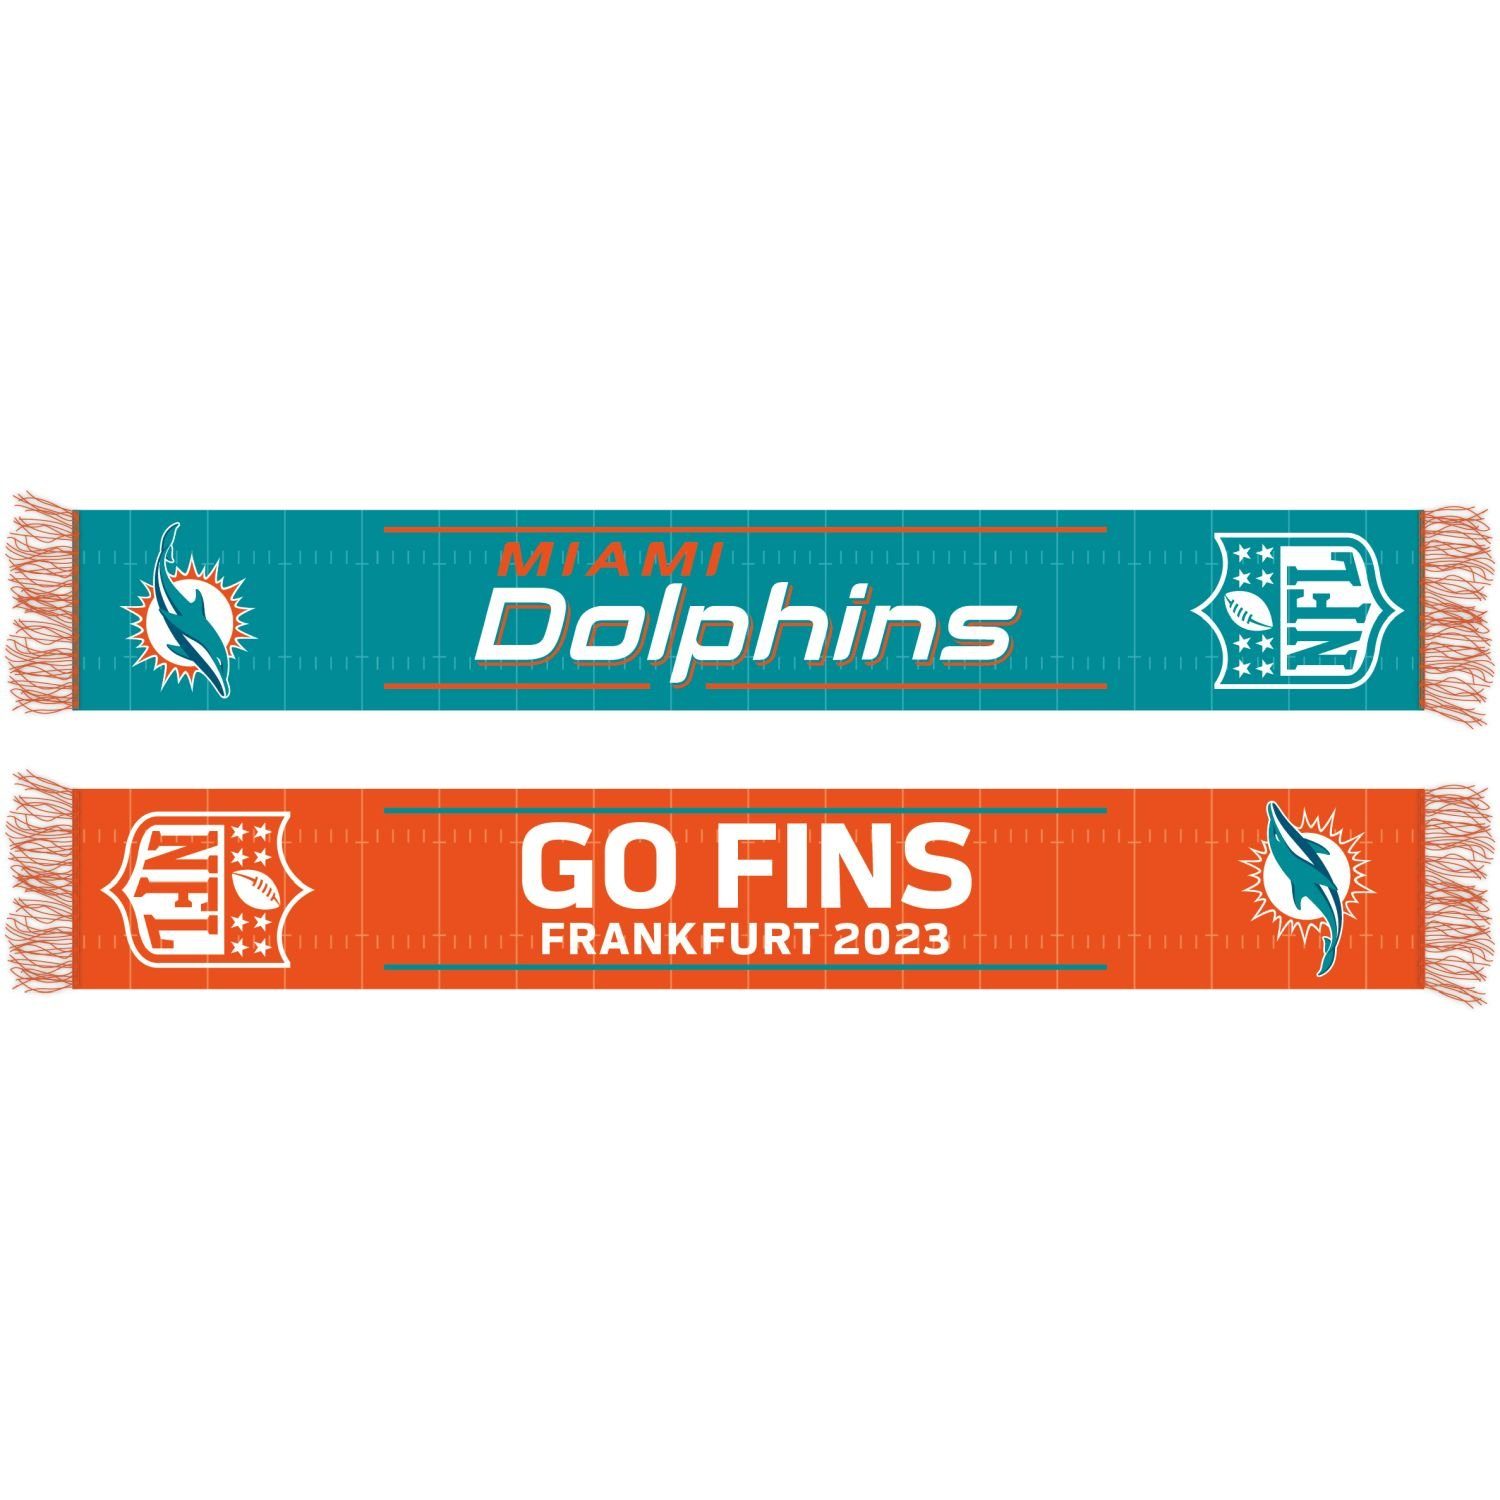 Great Branding Multifunktionstuch NFL Frankfurt 2023 Dolphins Miami Game GO FINS